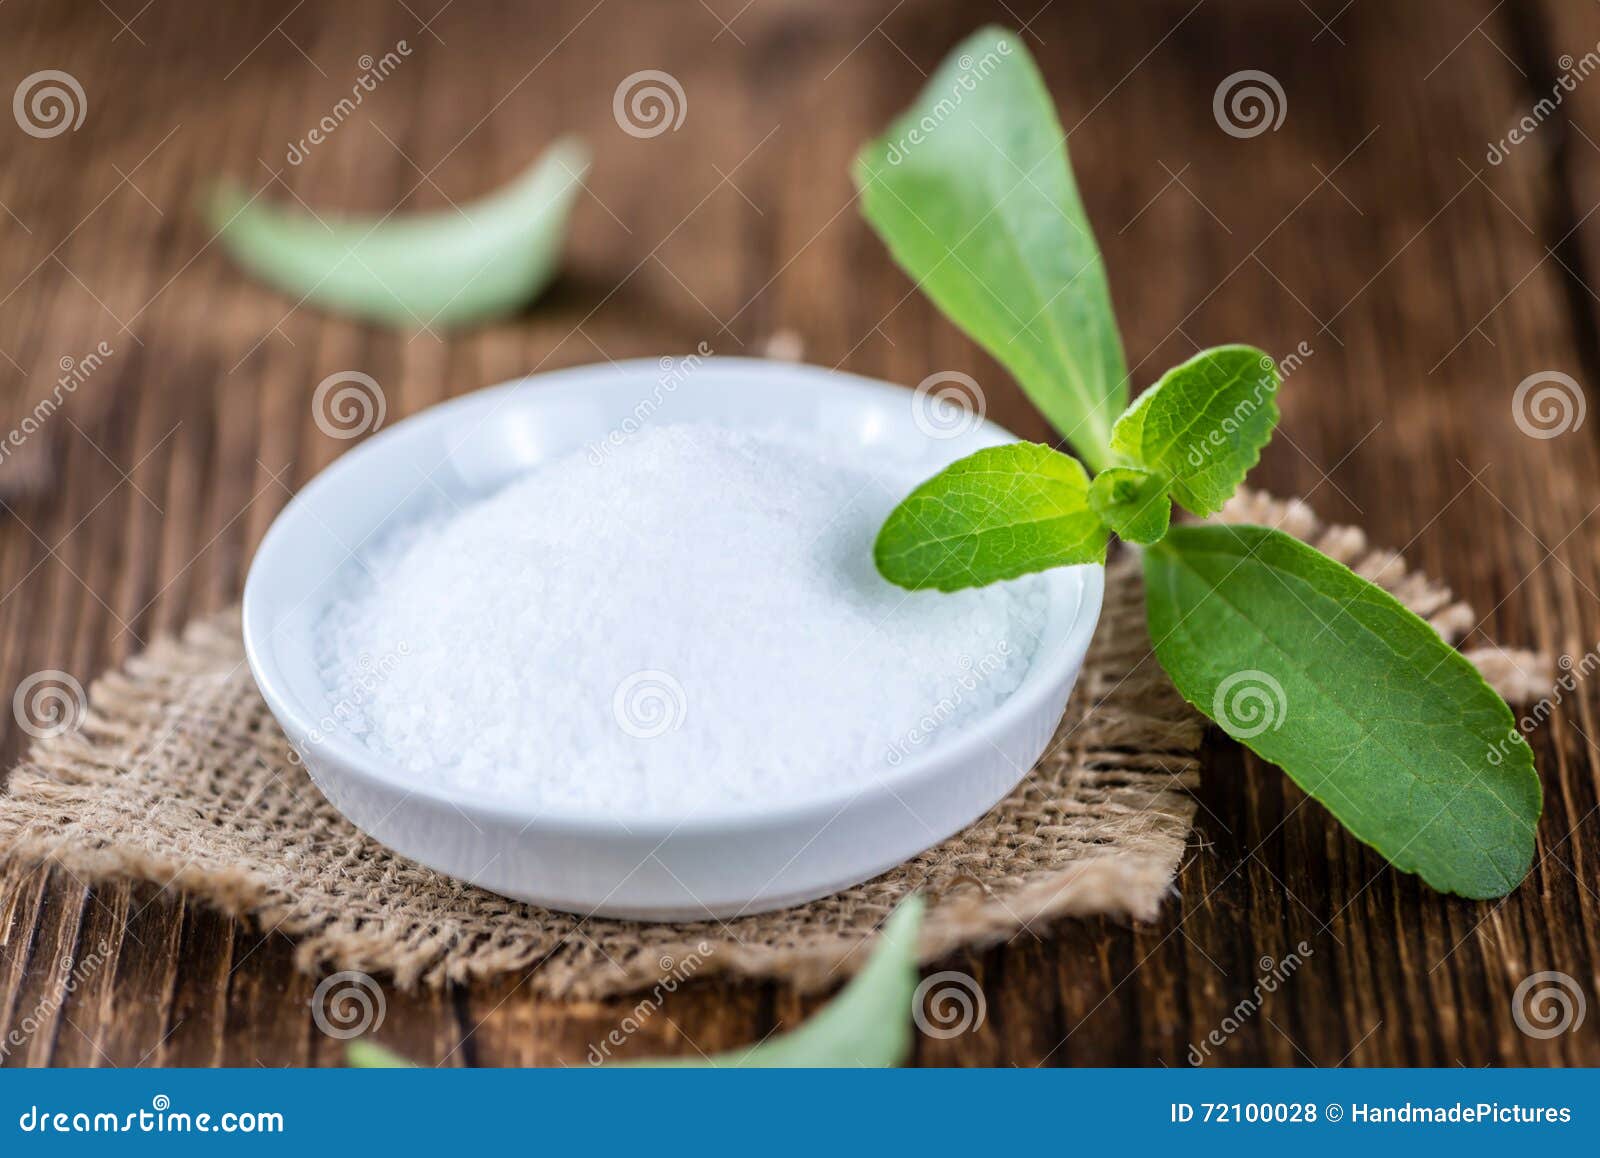 stevia (as granular; selective focus)